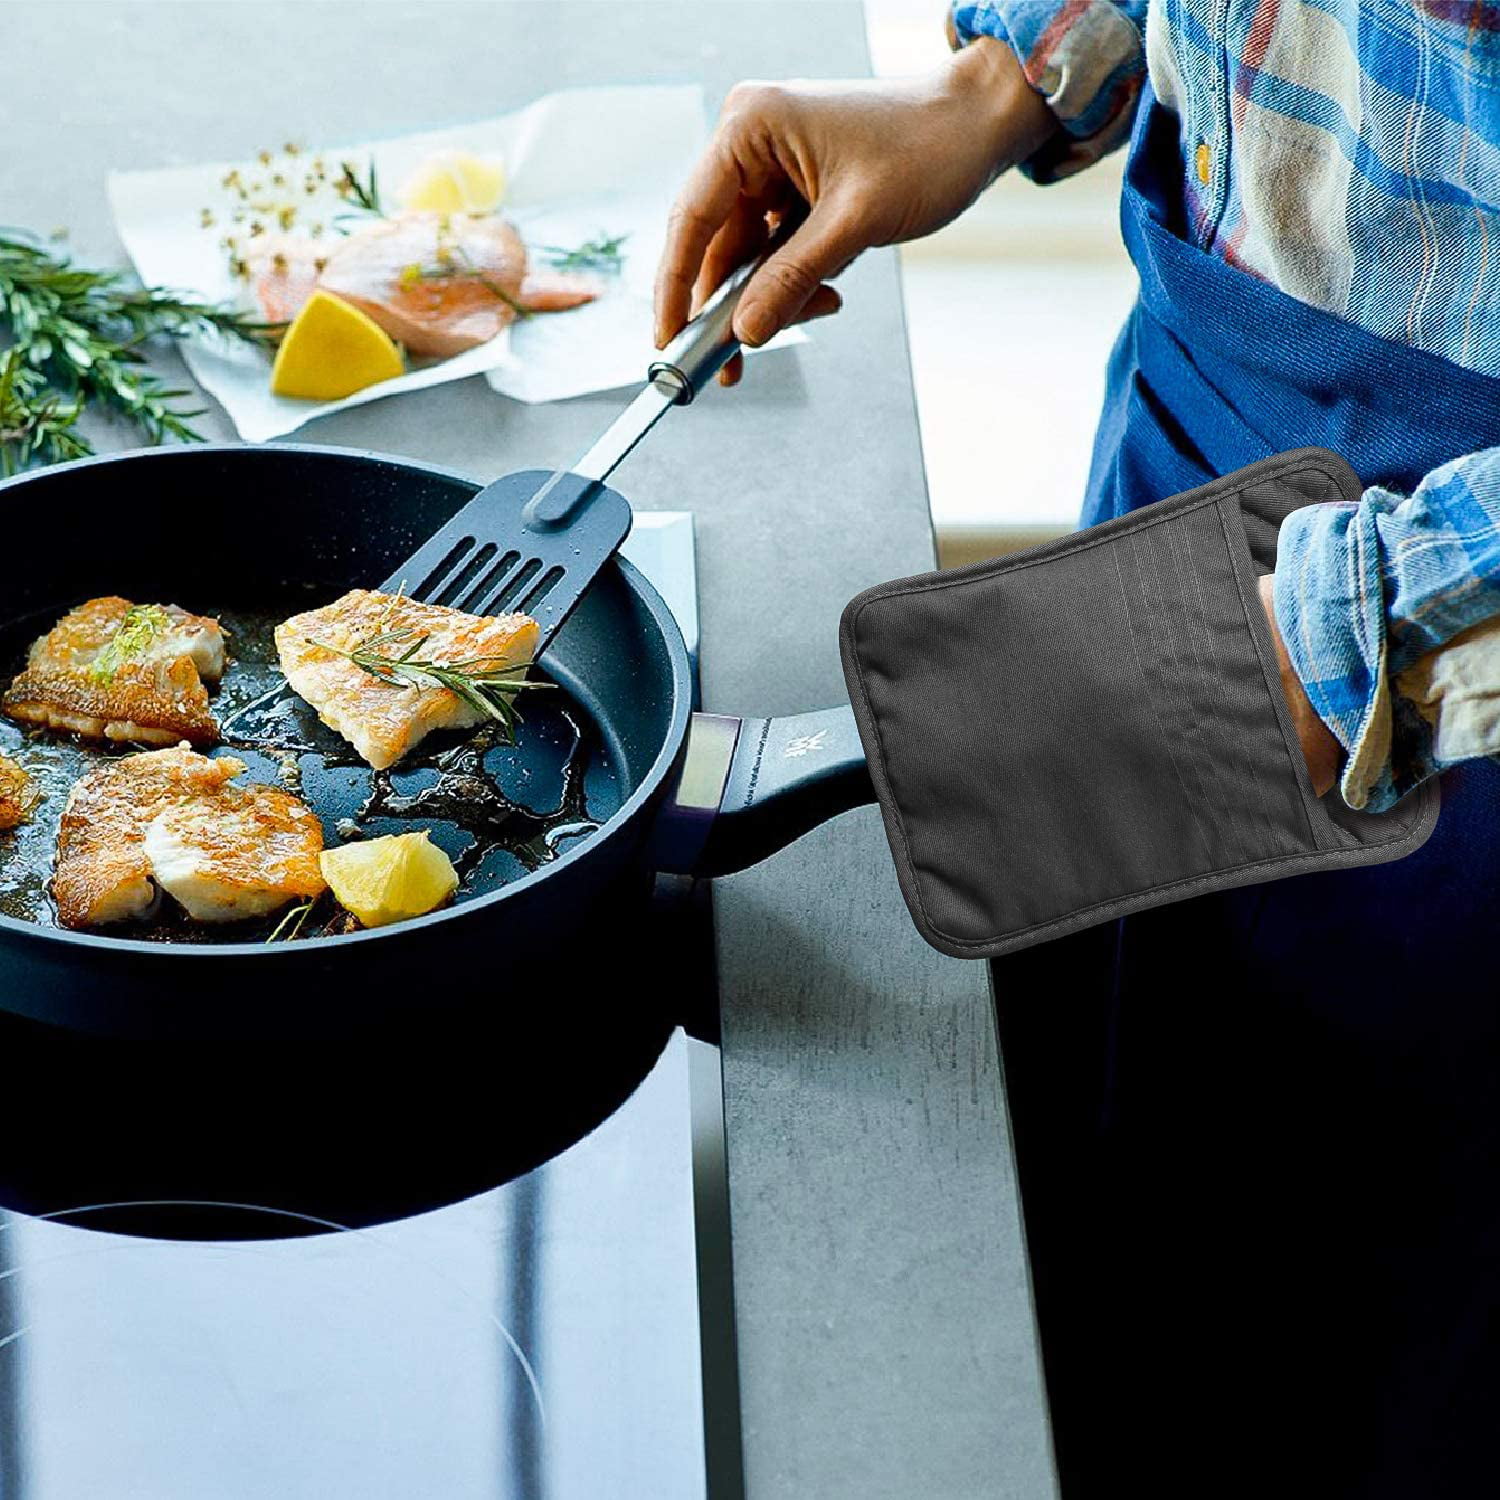 Kitchen Basic Trivet for Cooking and Baking Black 7”x 9” Set of 4 Cotton Pocket Pot Holder Kitchen Hot Pad Heat Resistant